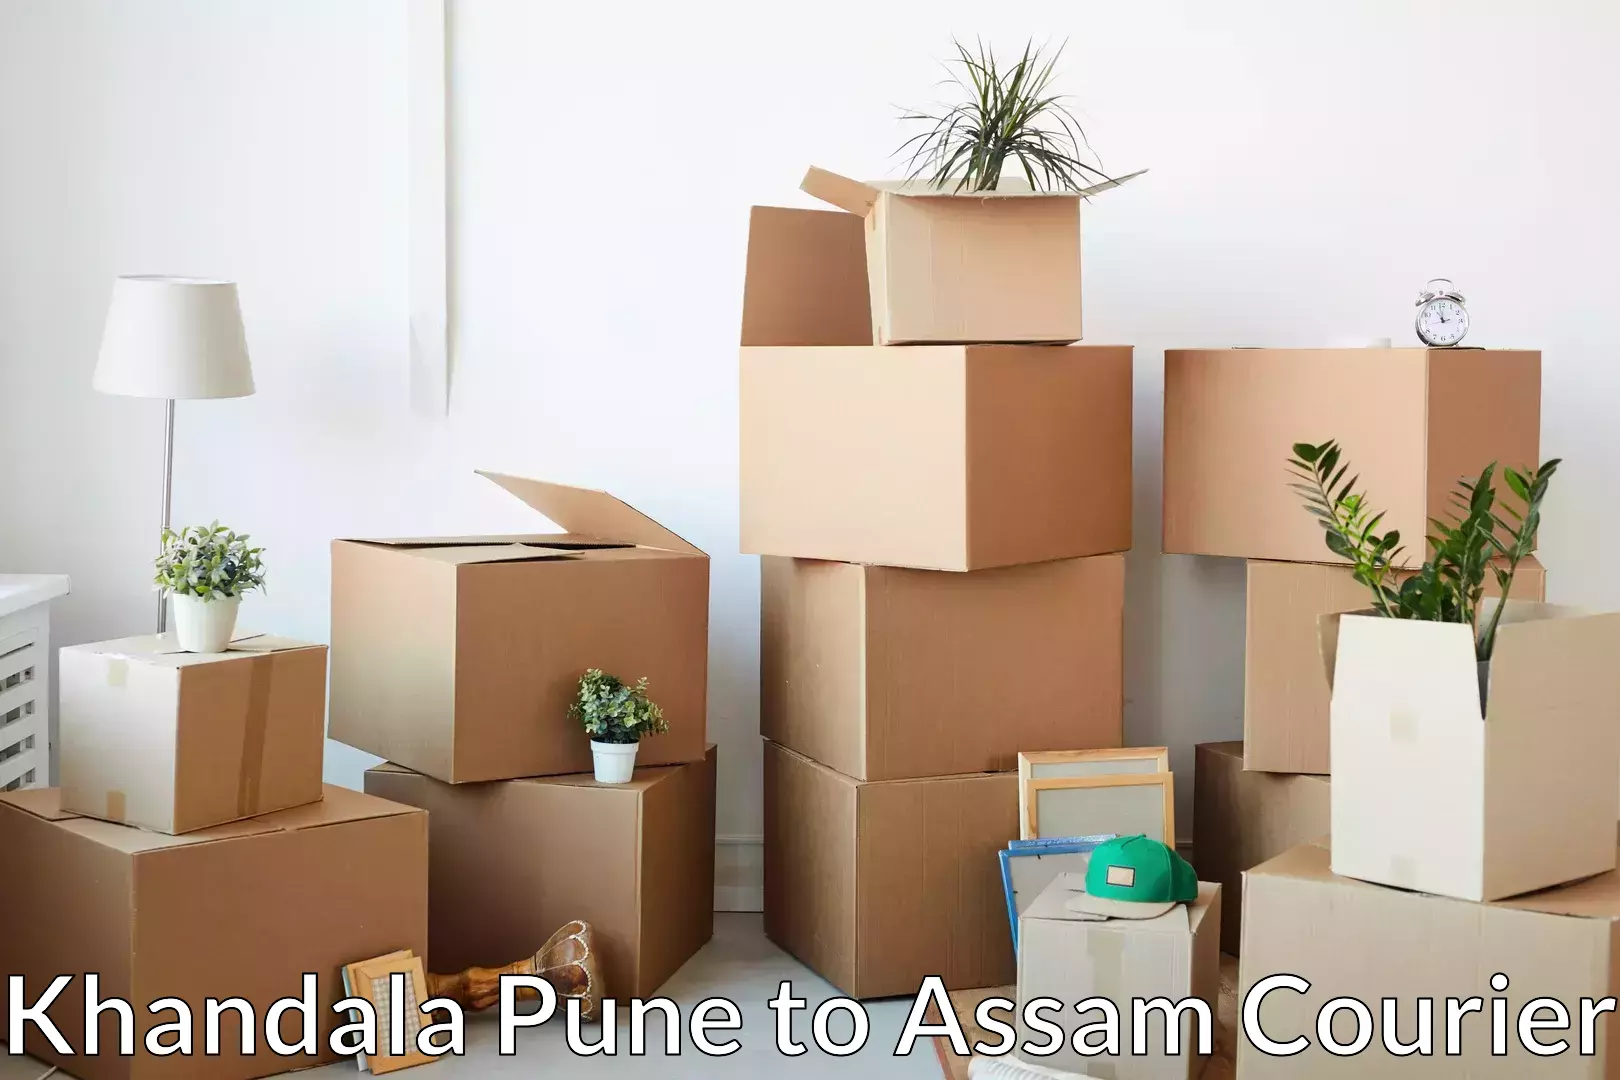 Professional moving company Khandala Pune to Biswanath